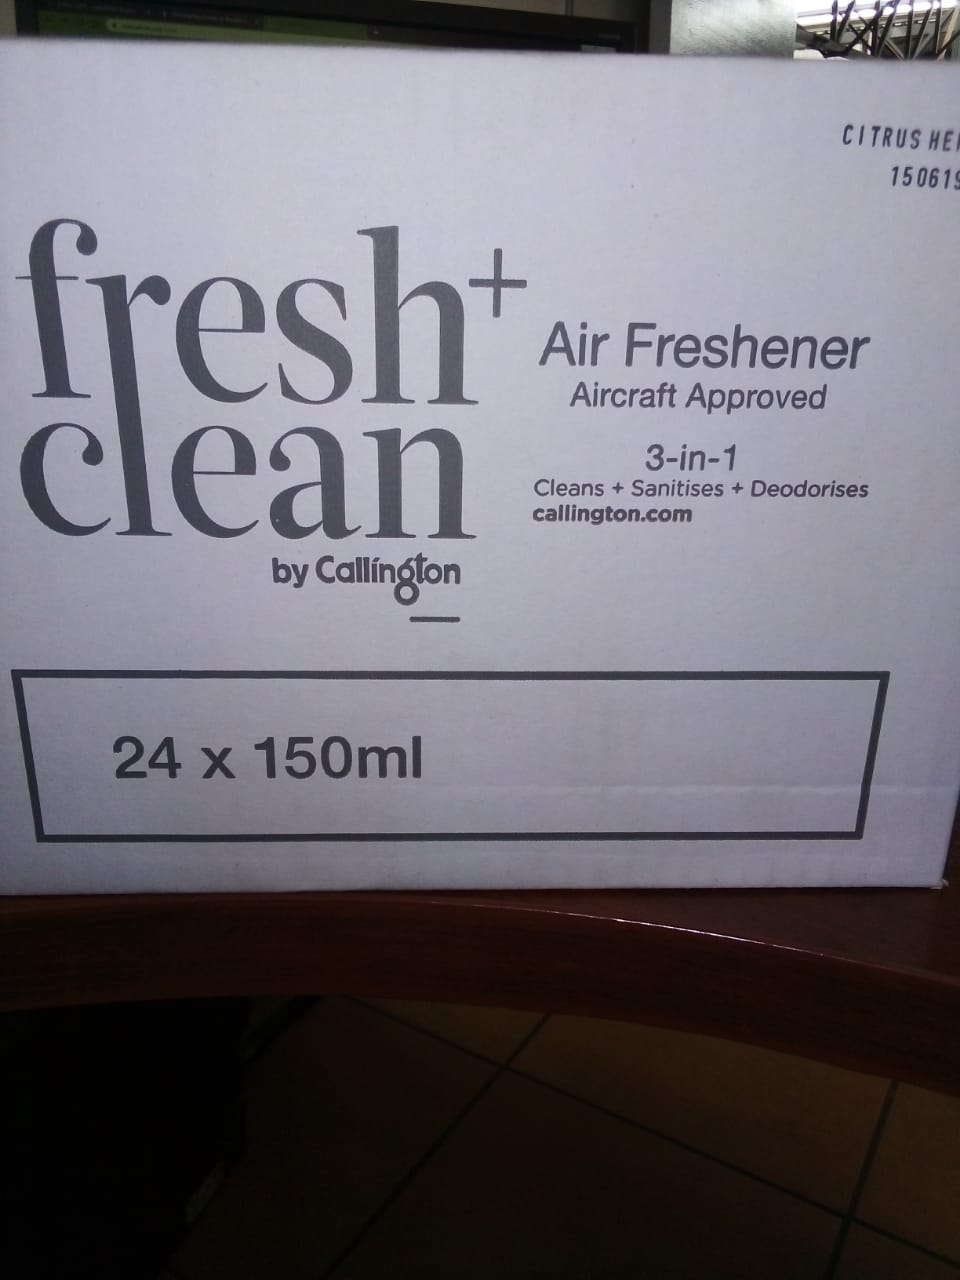 Carlton fresh clean Air freshner